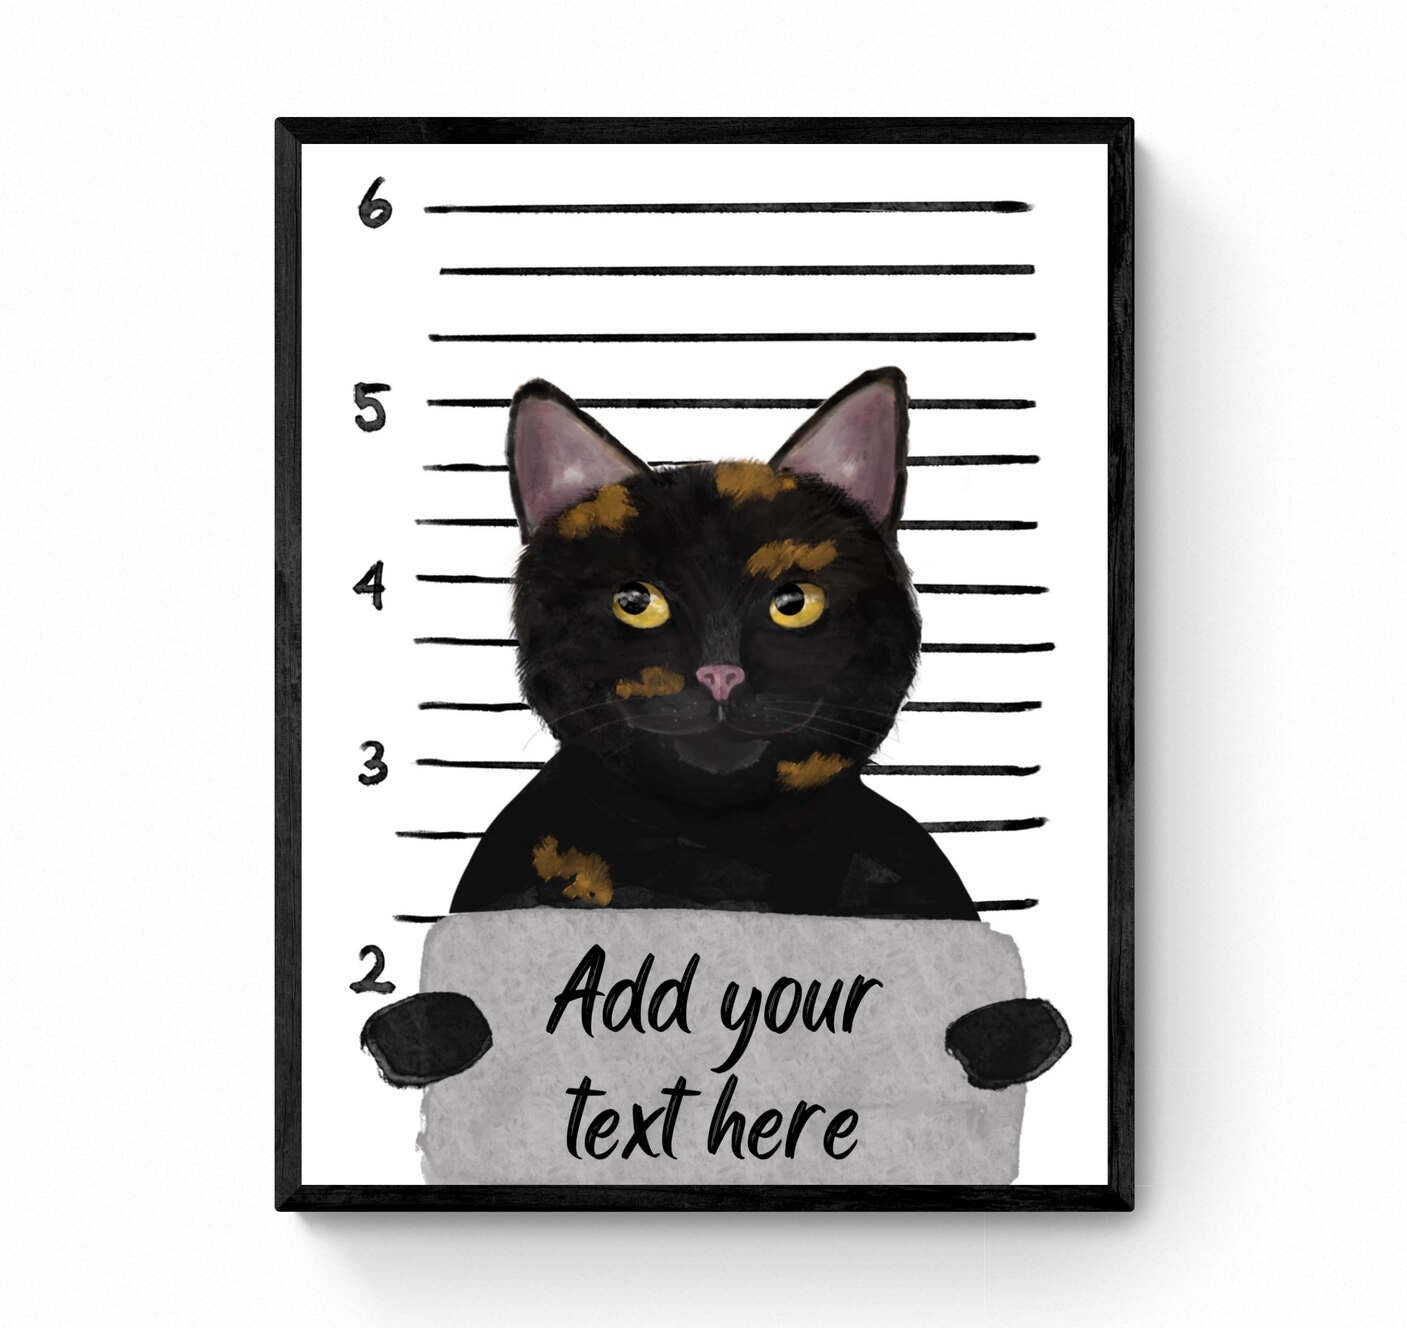 Customized Tortoiseshell Cat Mug Shot Print, Tortie Cat in Prison Artwork, Bathroom Painting, Cat With Toilet Paper Print, Cat Lover Gift